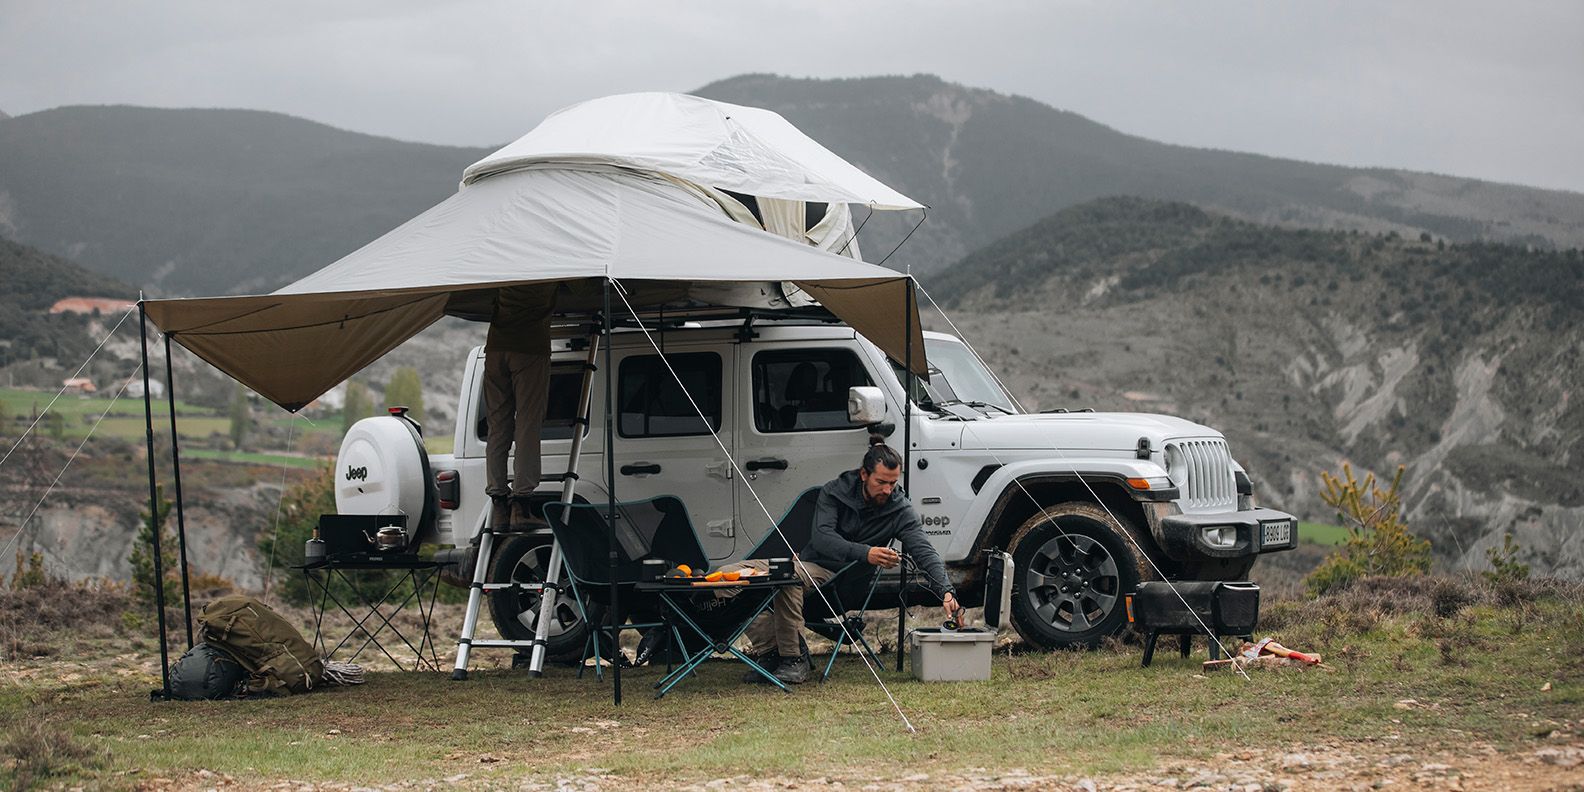 I fjellet står en jeep parkert med et Thule Approch-taktelt, og en mann sitter under annekset